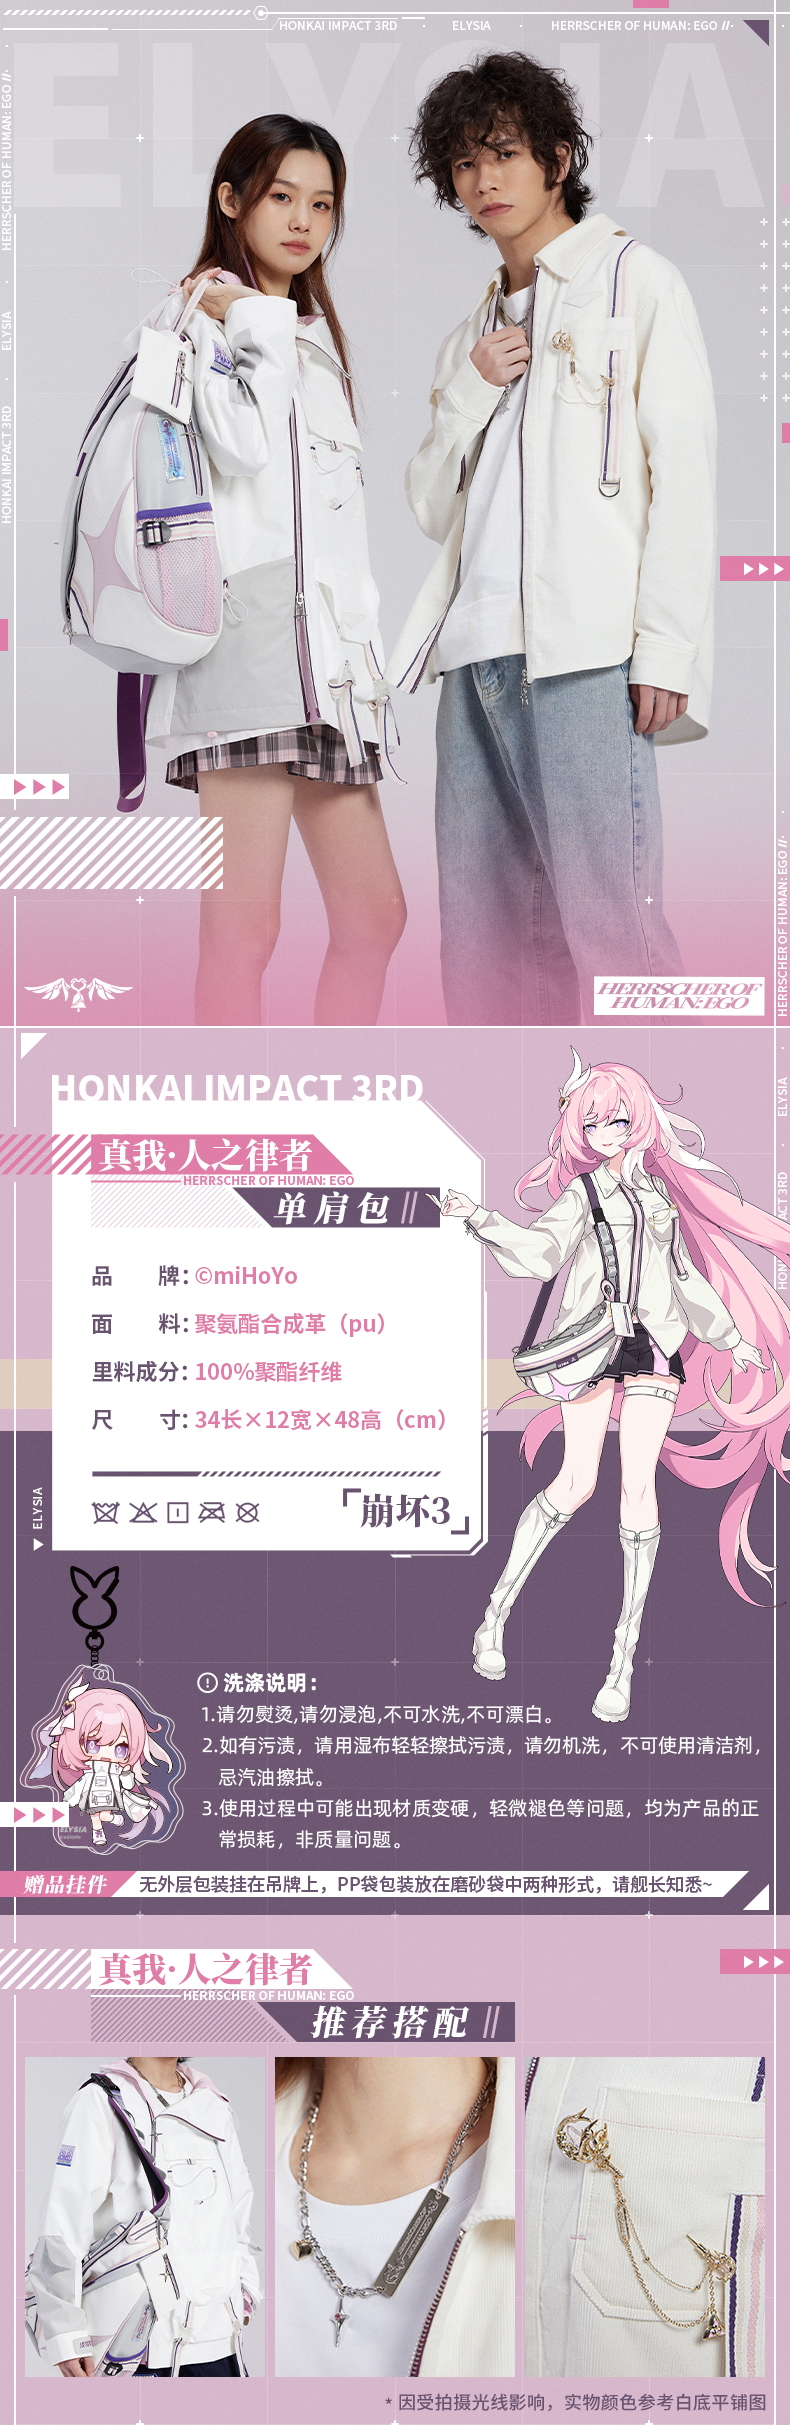 Elysia - Houkai 3rd - Image by euneun #3893089 - Zerochan Anime Image Board